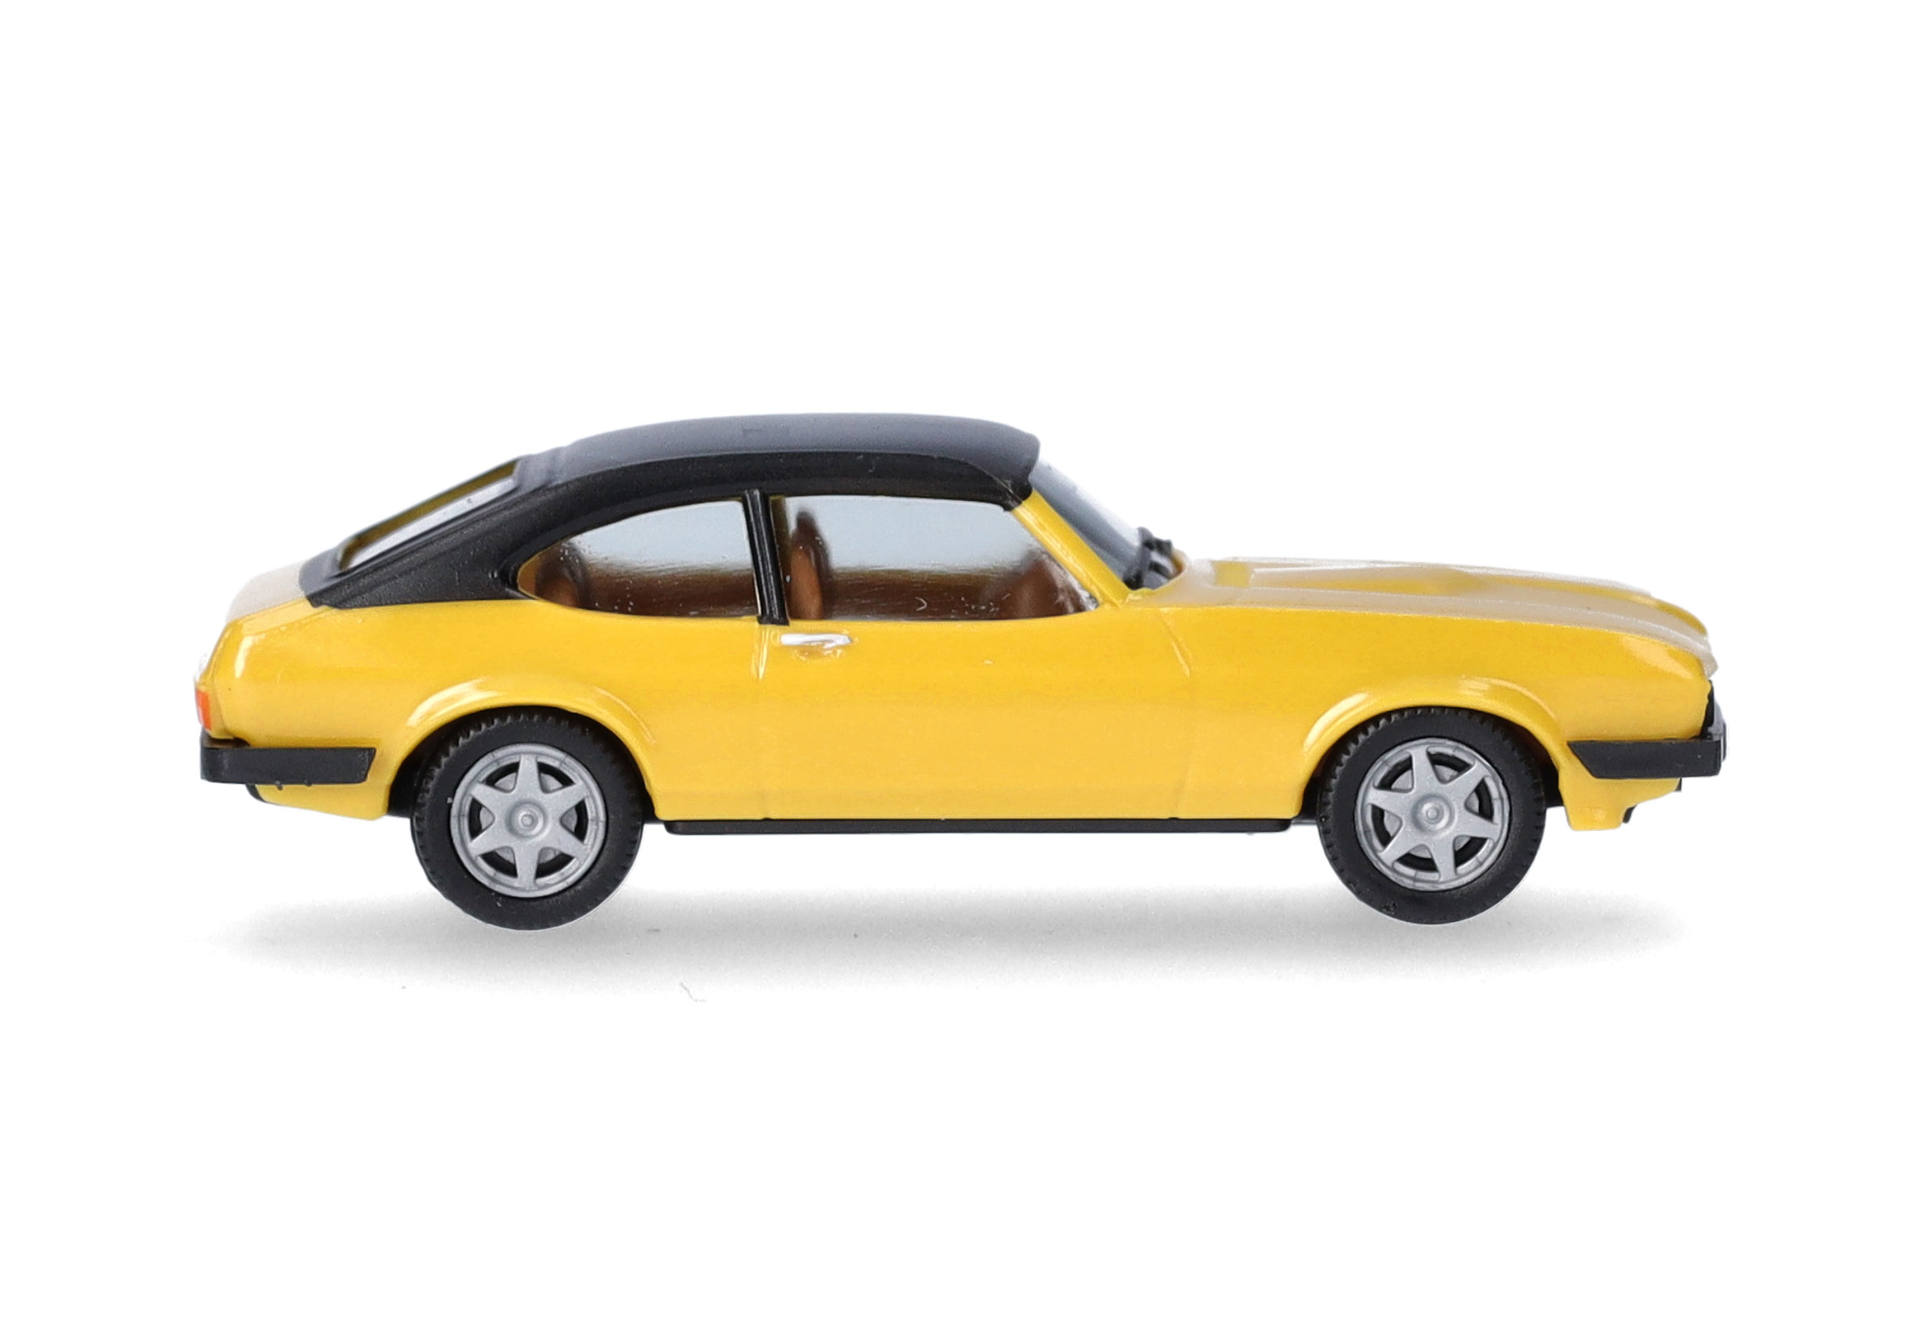 Ford Capri II with vinyl roof, daytona yellow